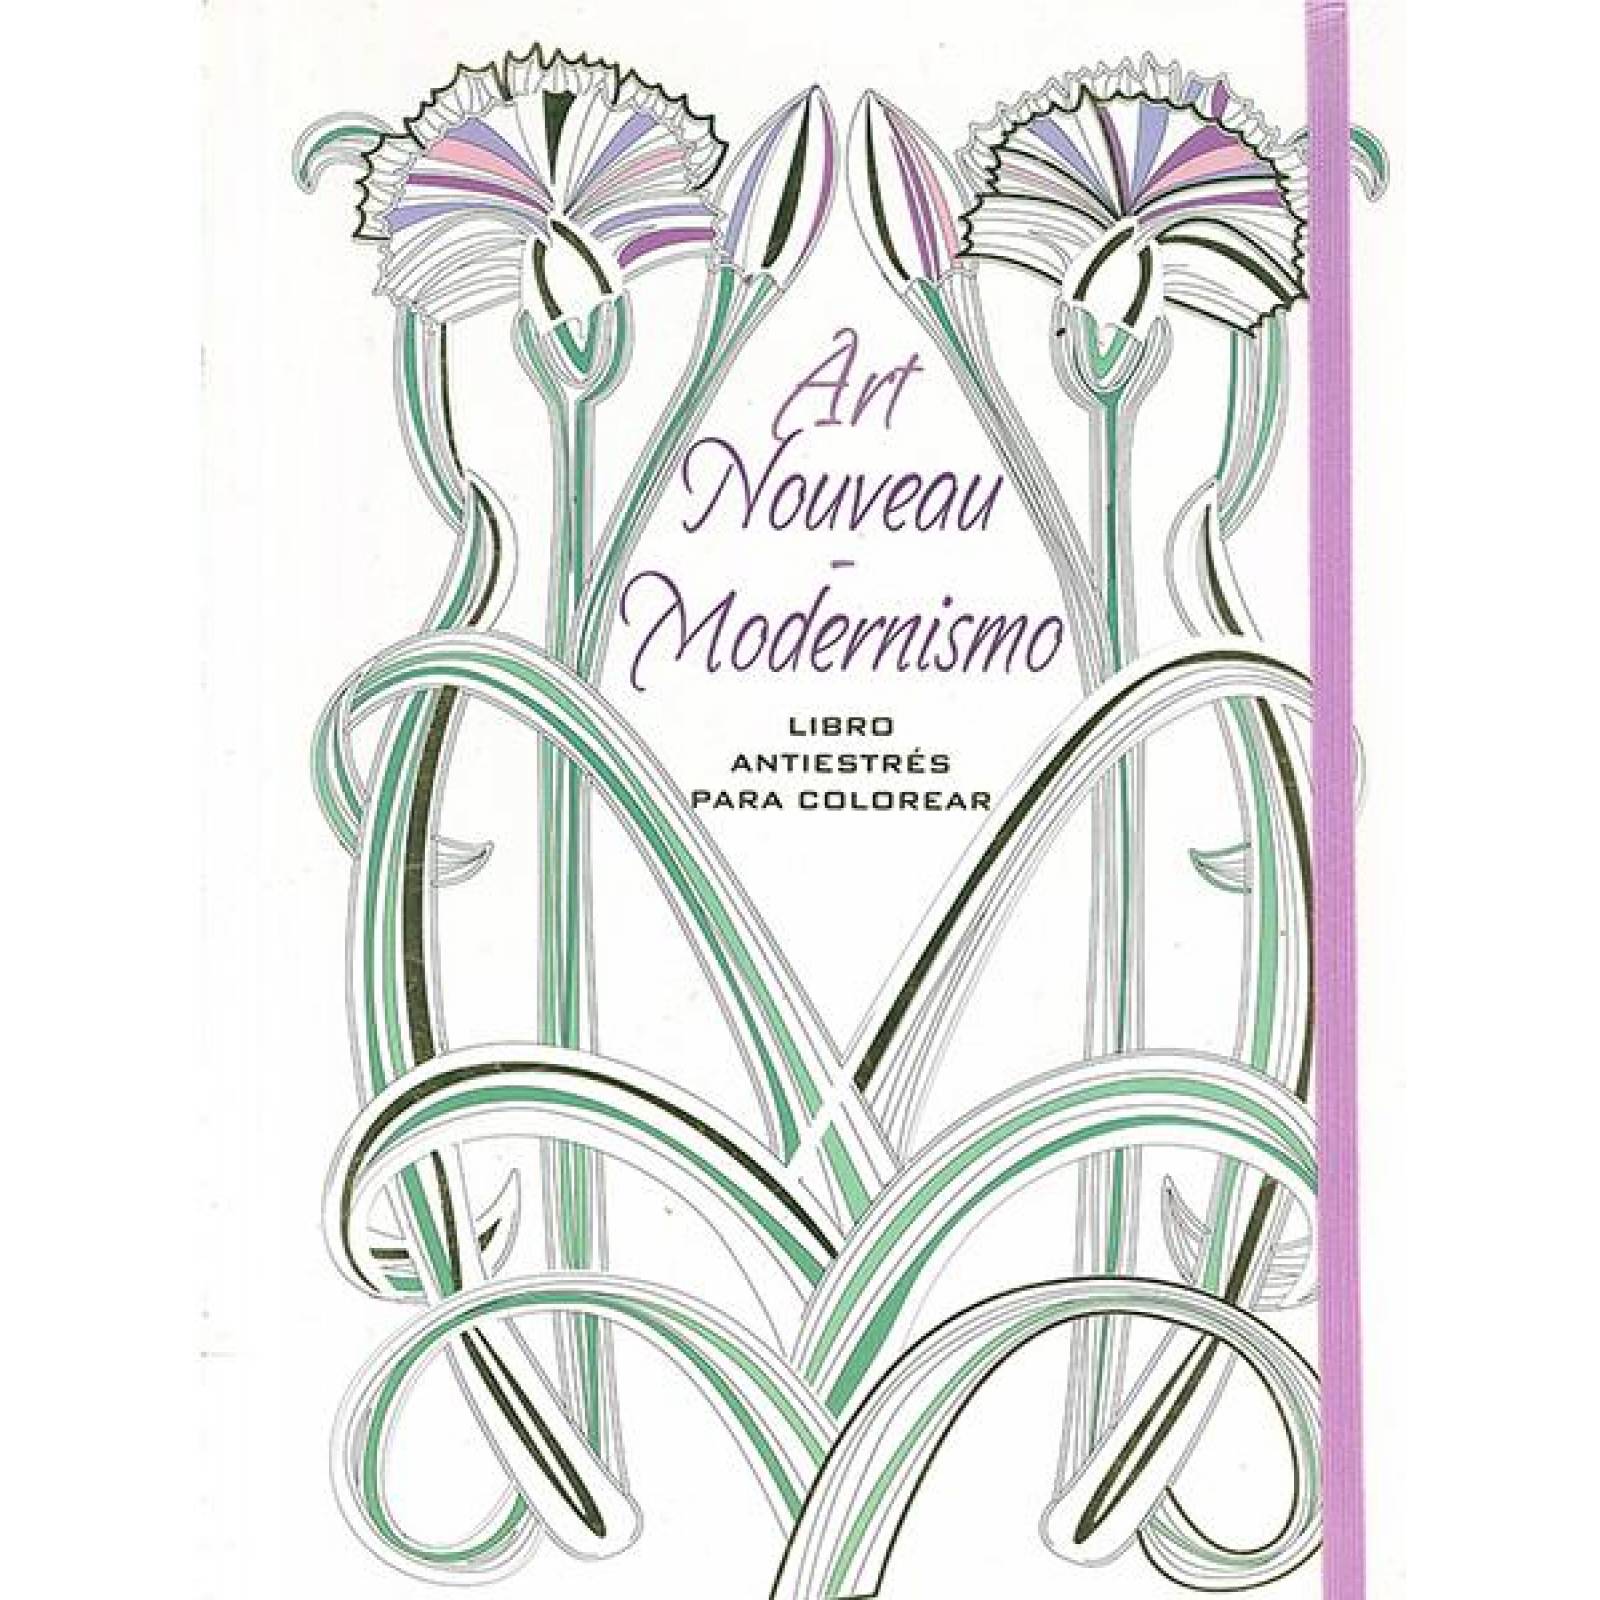 Art nouveau-modernismo libro antiestrés 